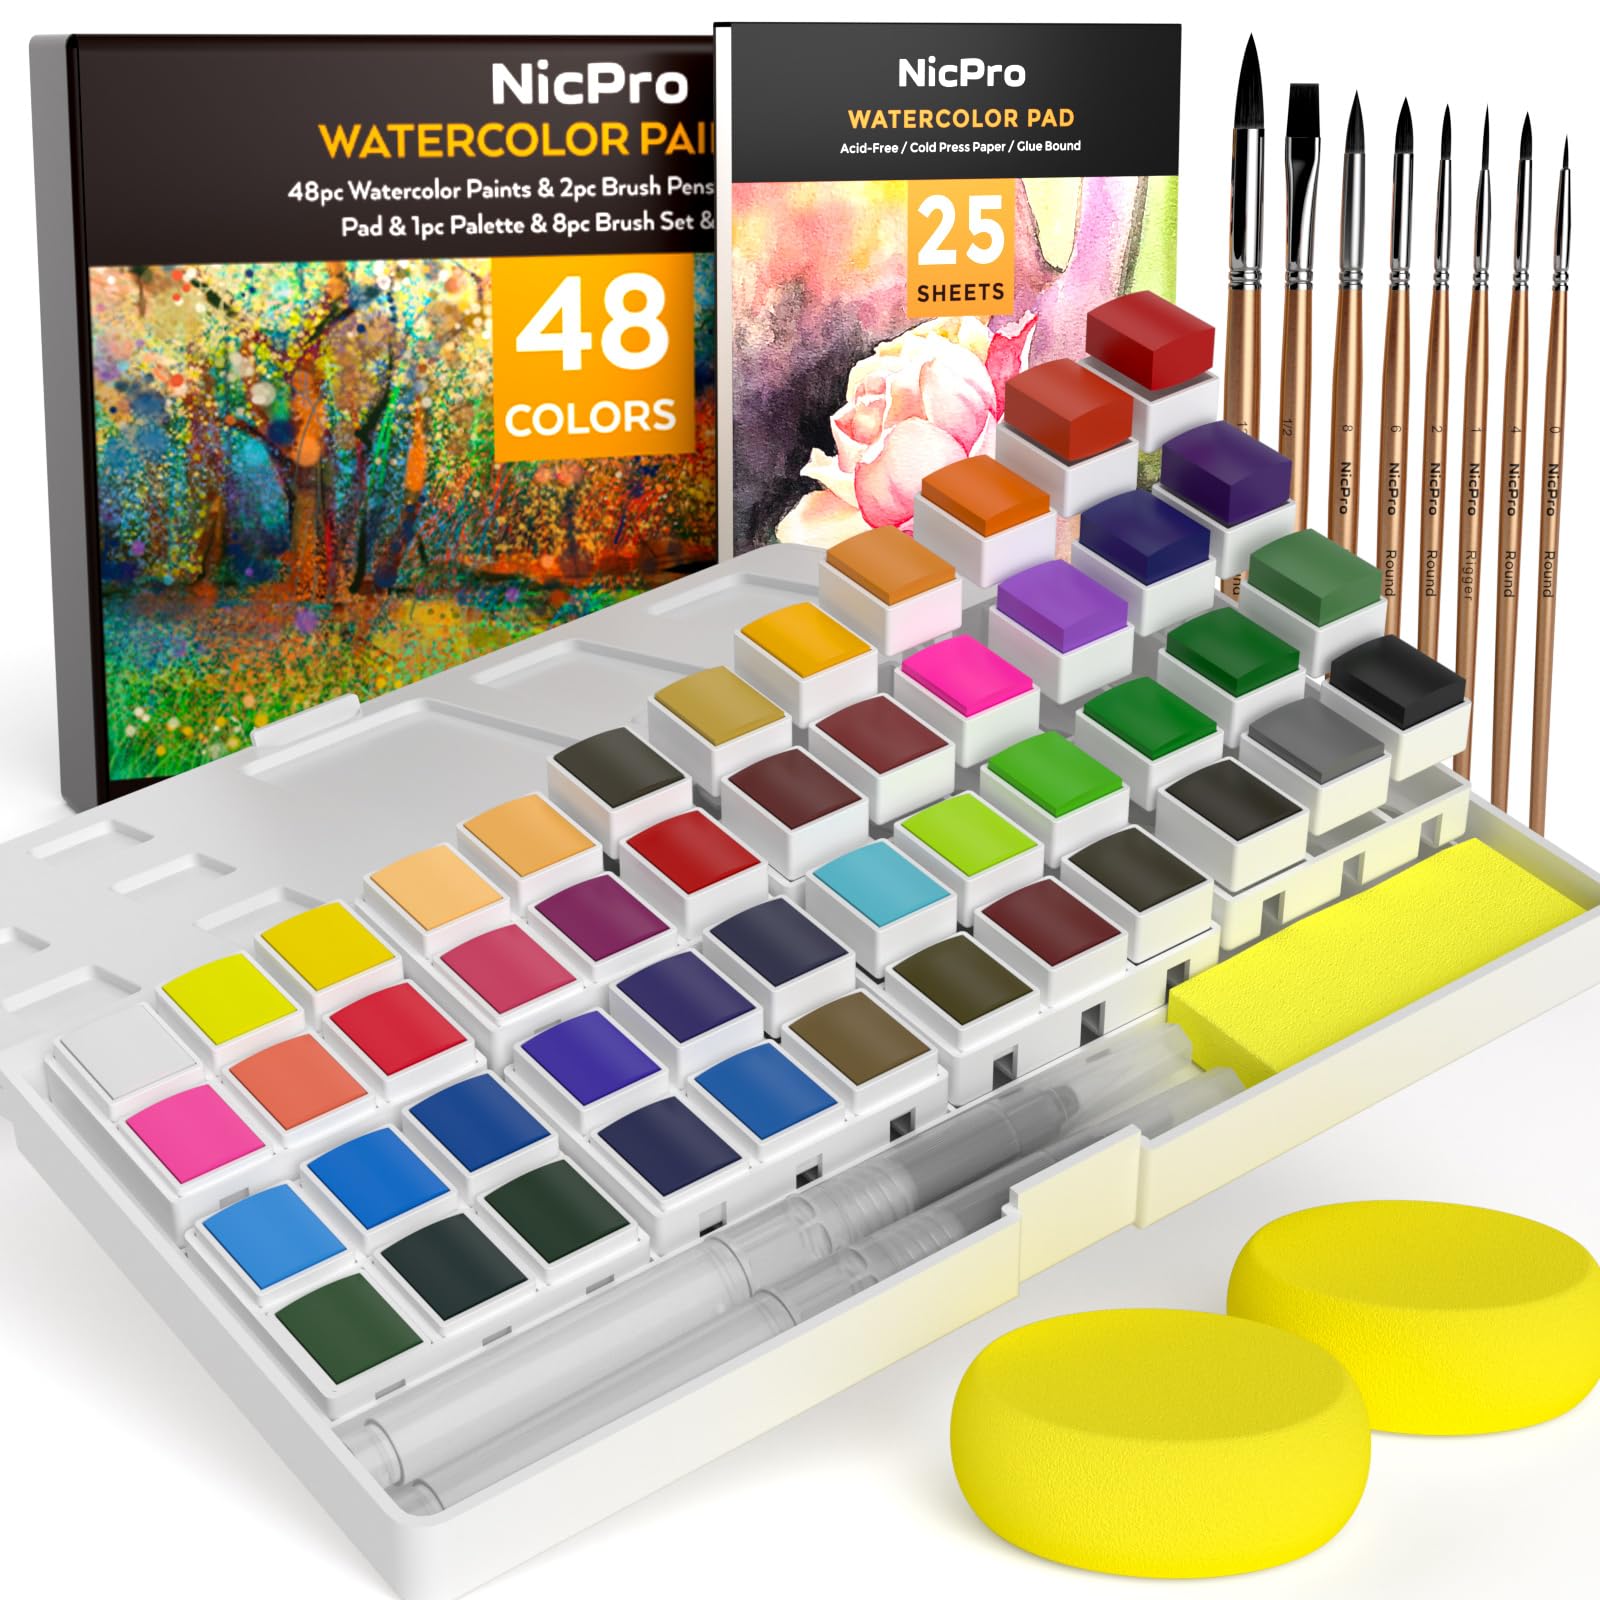 SCHPIRERR FARBEN - 48 Watercolor Paints Set, Big 5 Paint Brushes